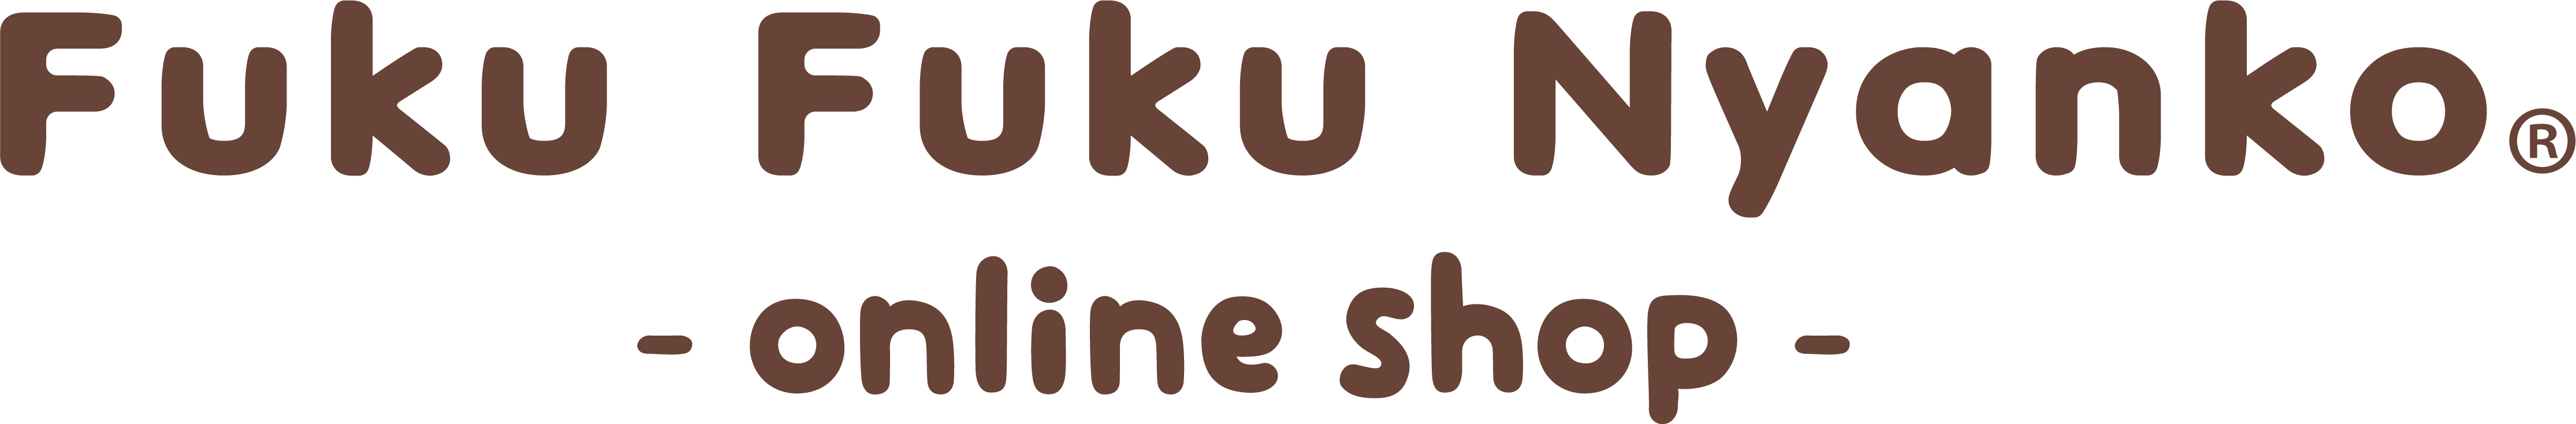 Fuku Fuku Nyanko online shop ふくふくにゃんこ オンラインショップ